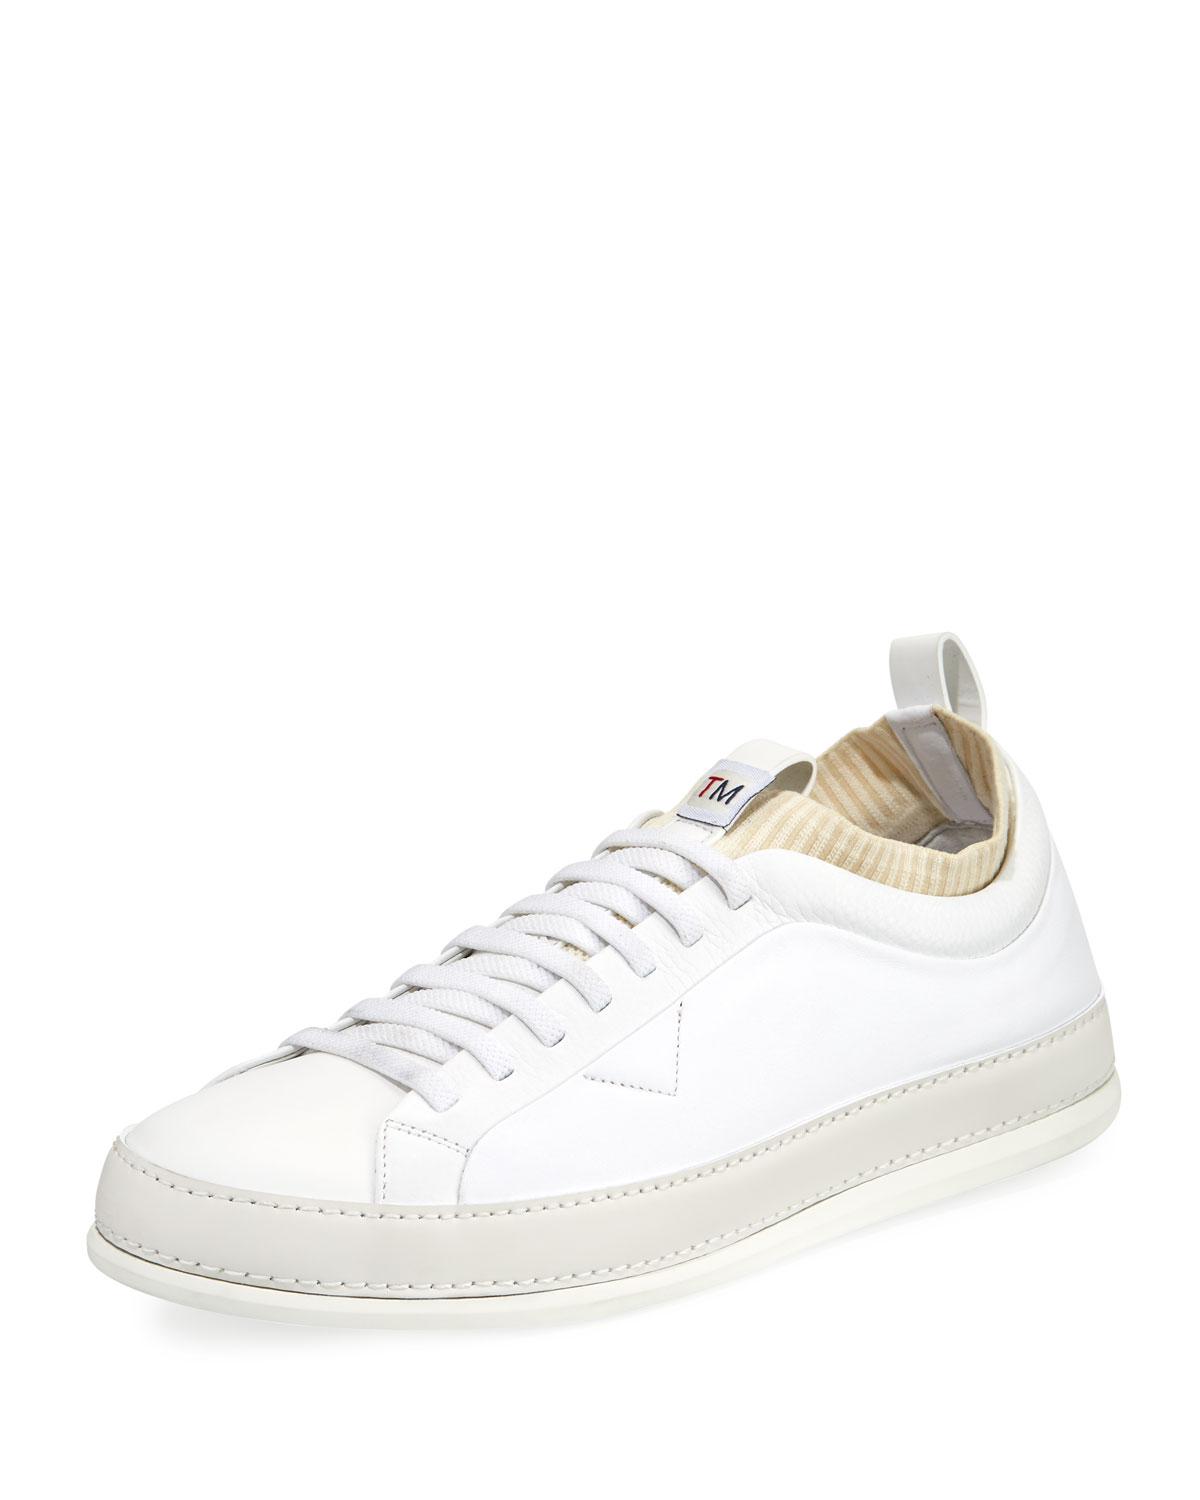 Ermenegildo Zegna Men's Imperia Low-top Leather Sneakers in White for ...